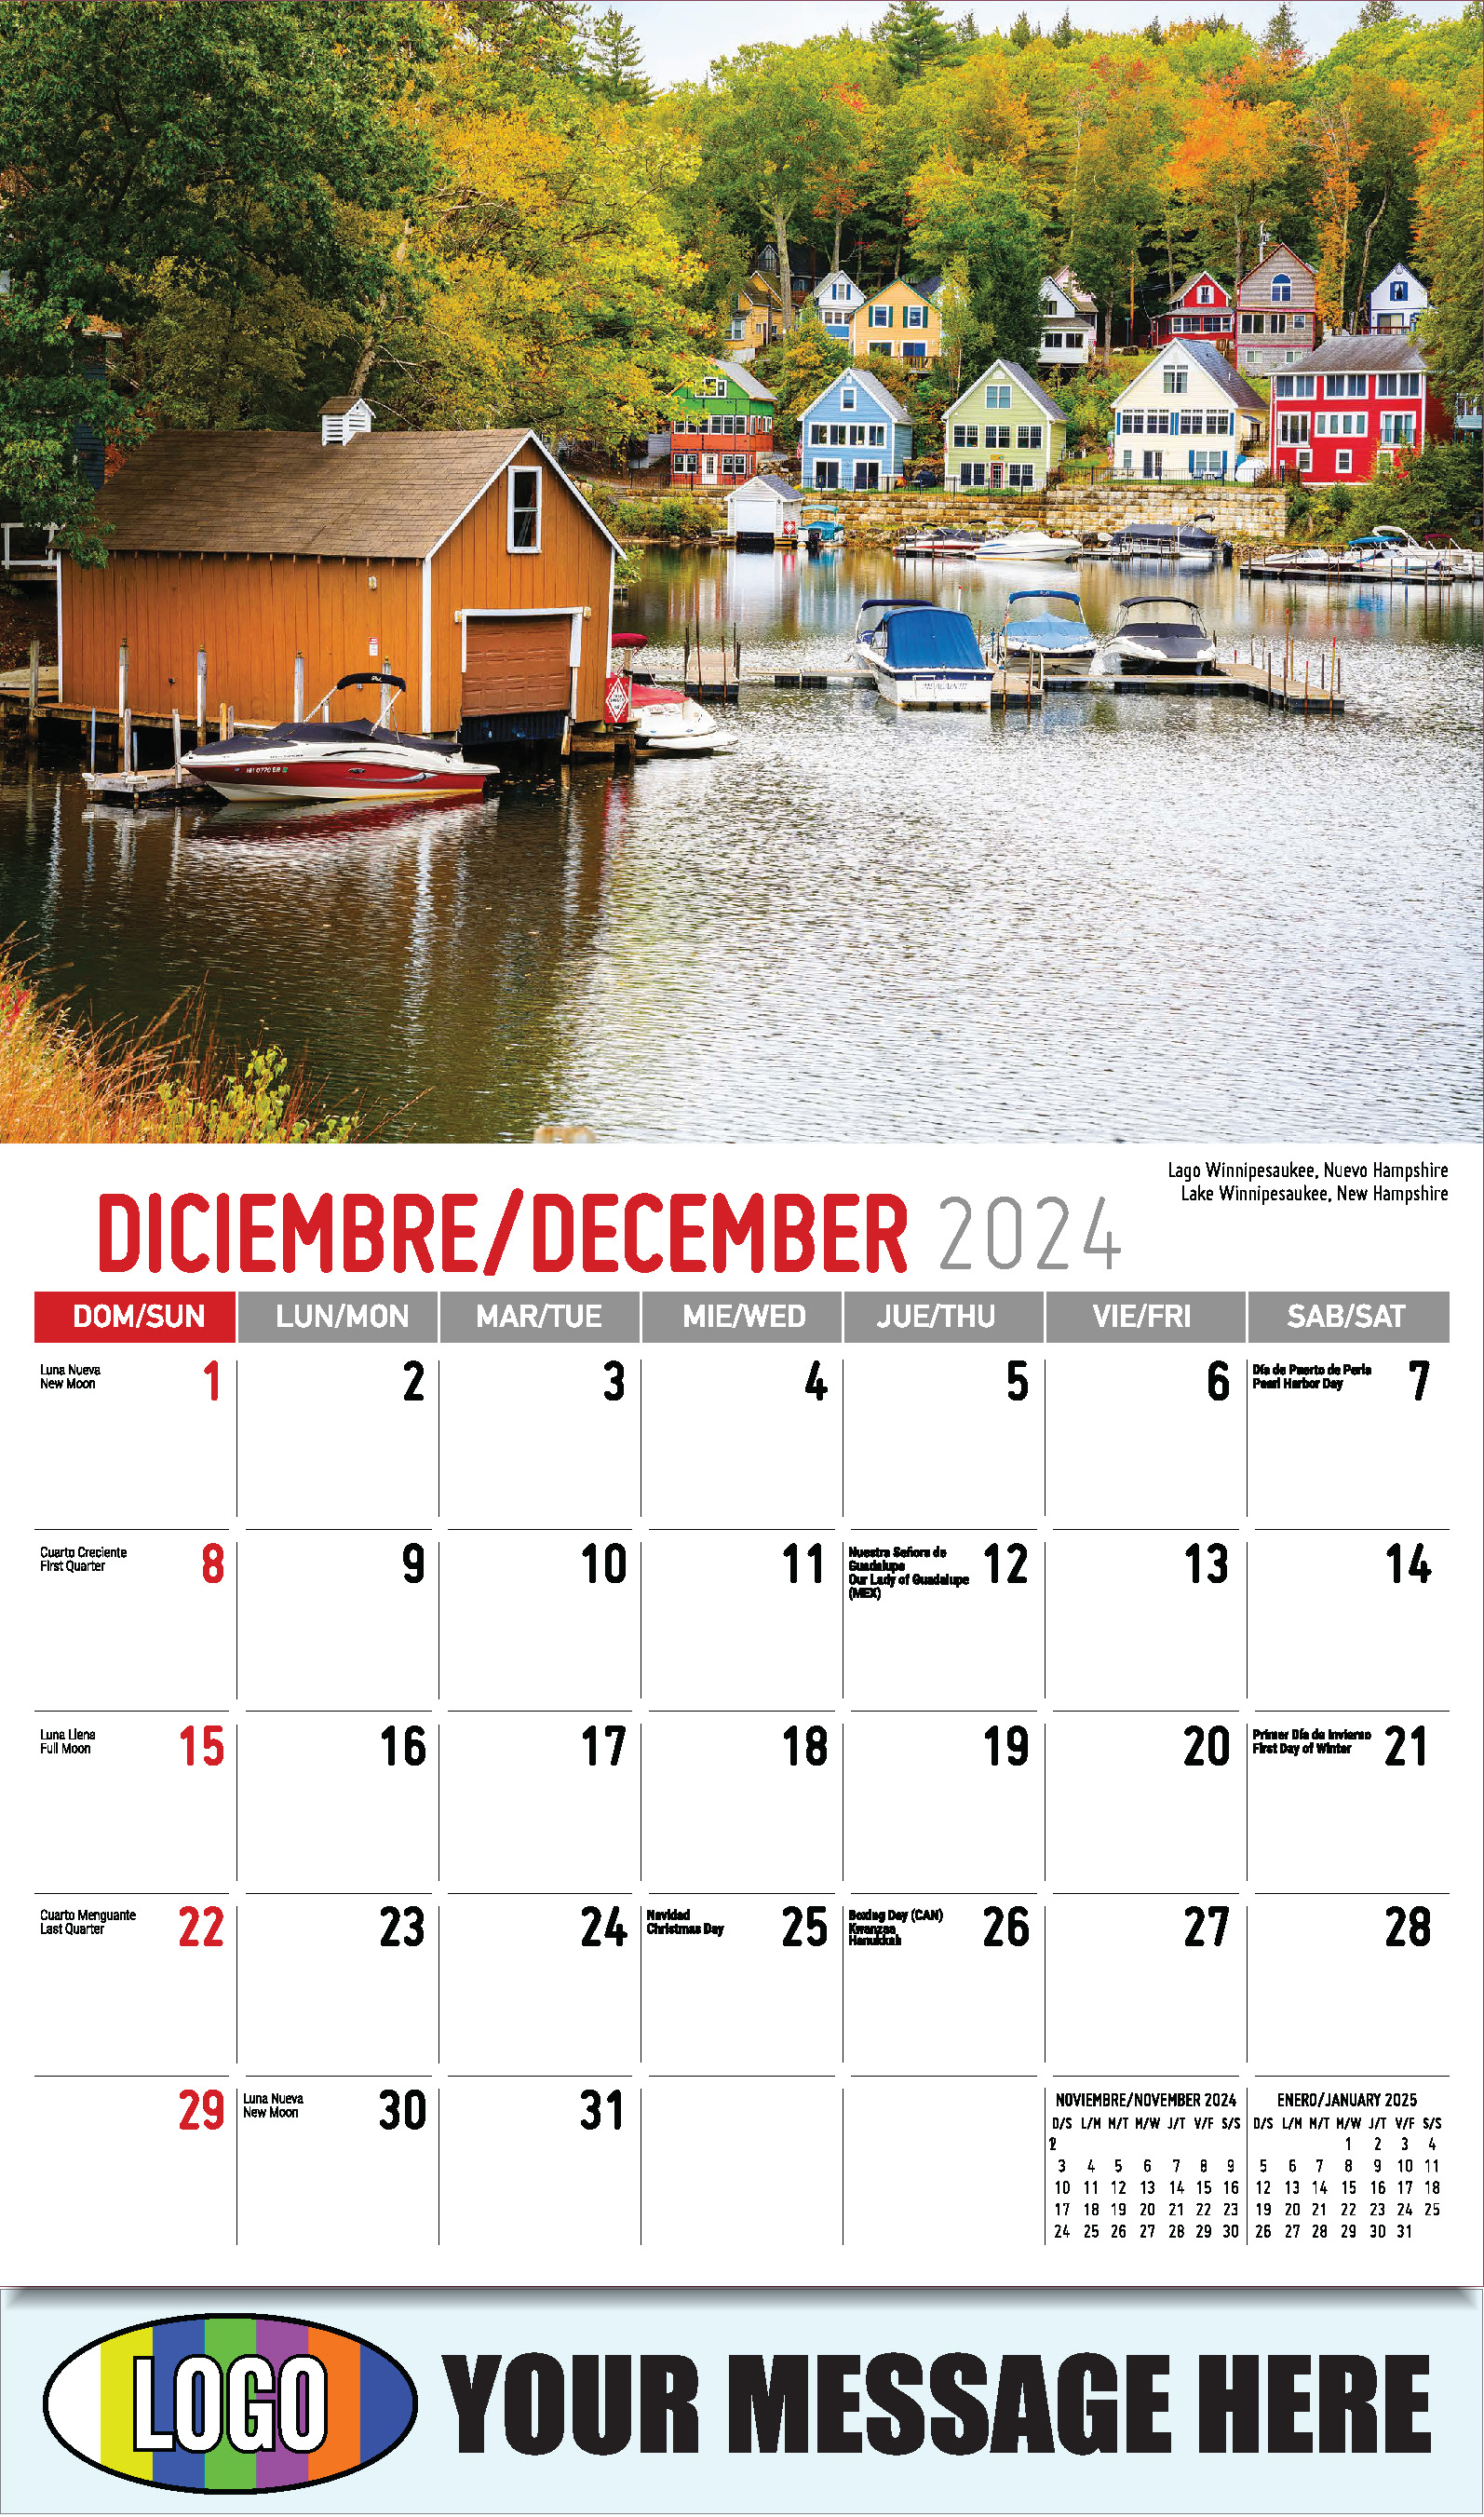 Scenes of America 2025 Bilingual Business Promo Calendar - December_a